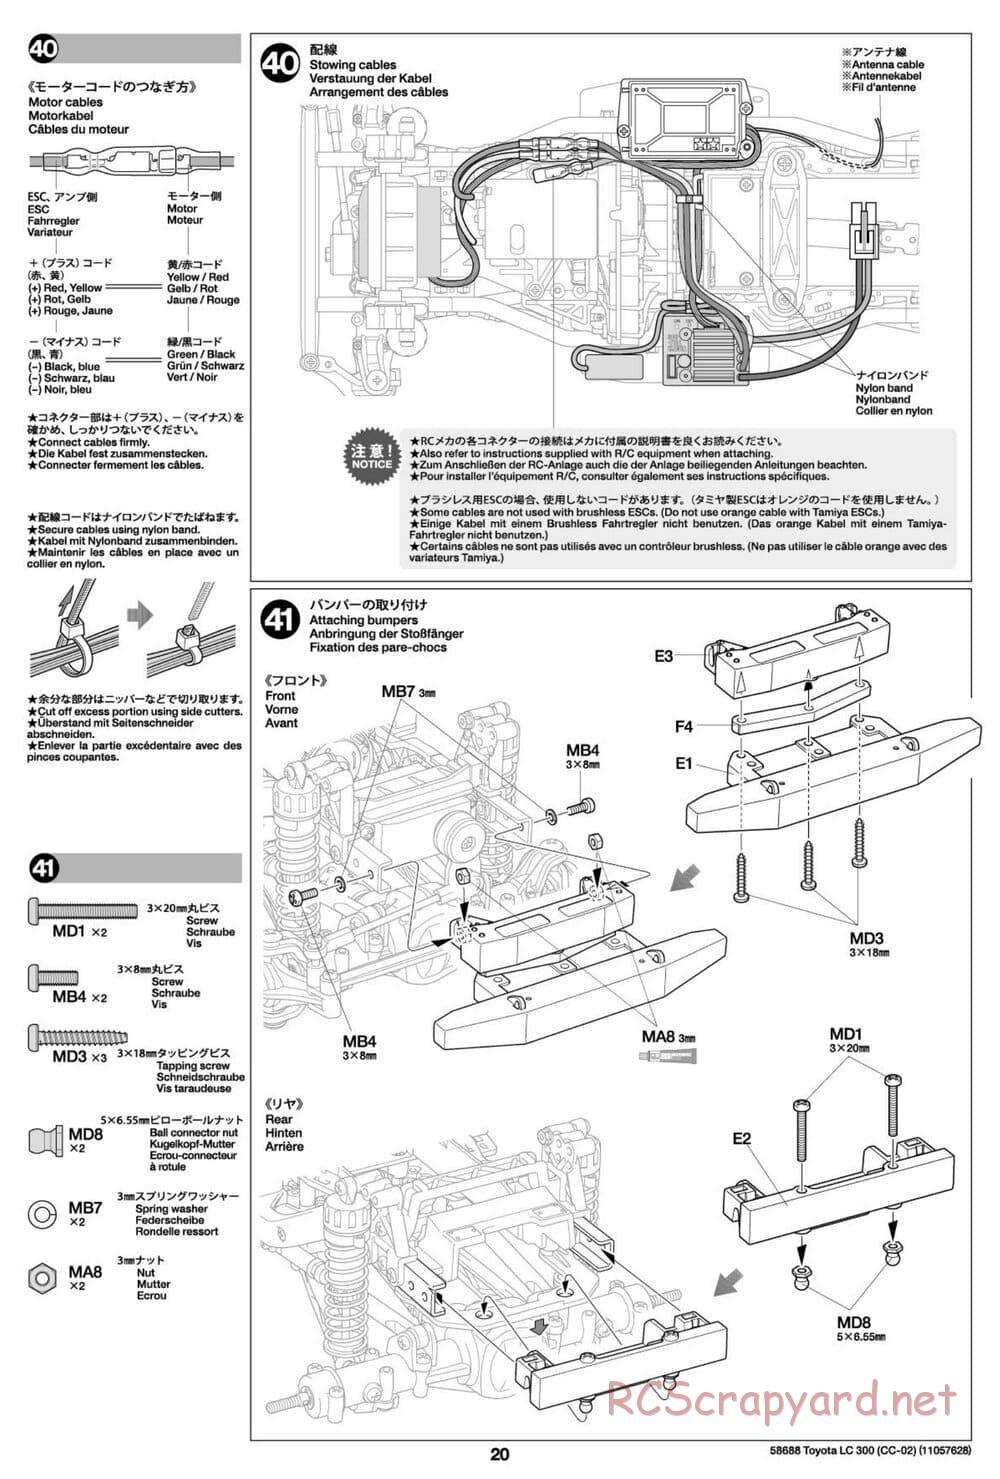 Tamiya - Toyota Land Cruiser 300 - CC-02 Chassis - Manual - Page 20